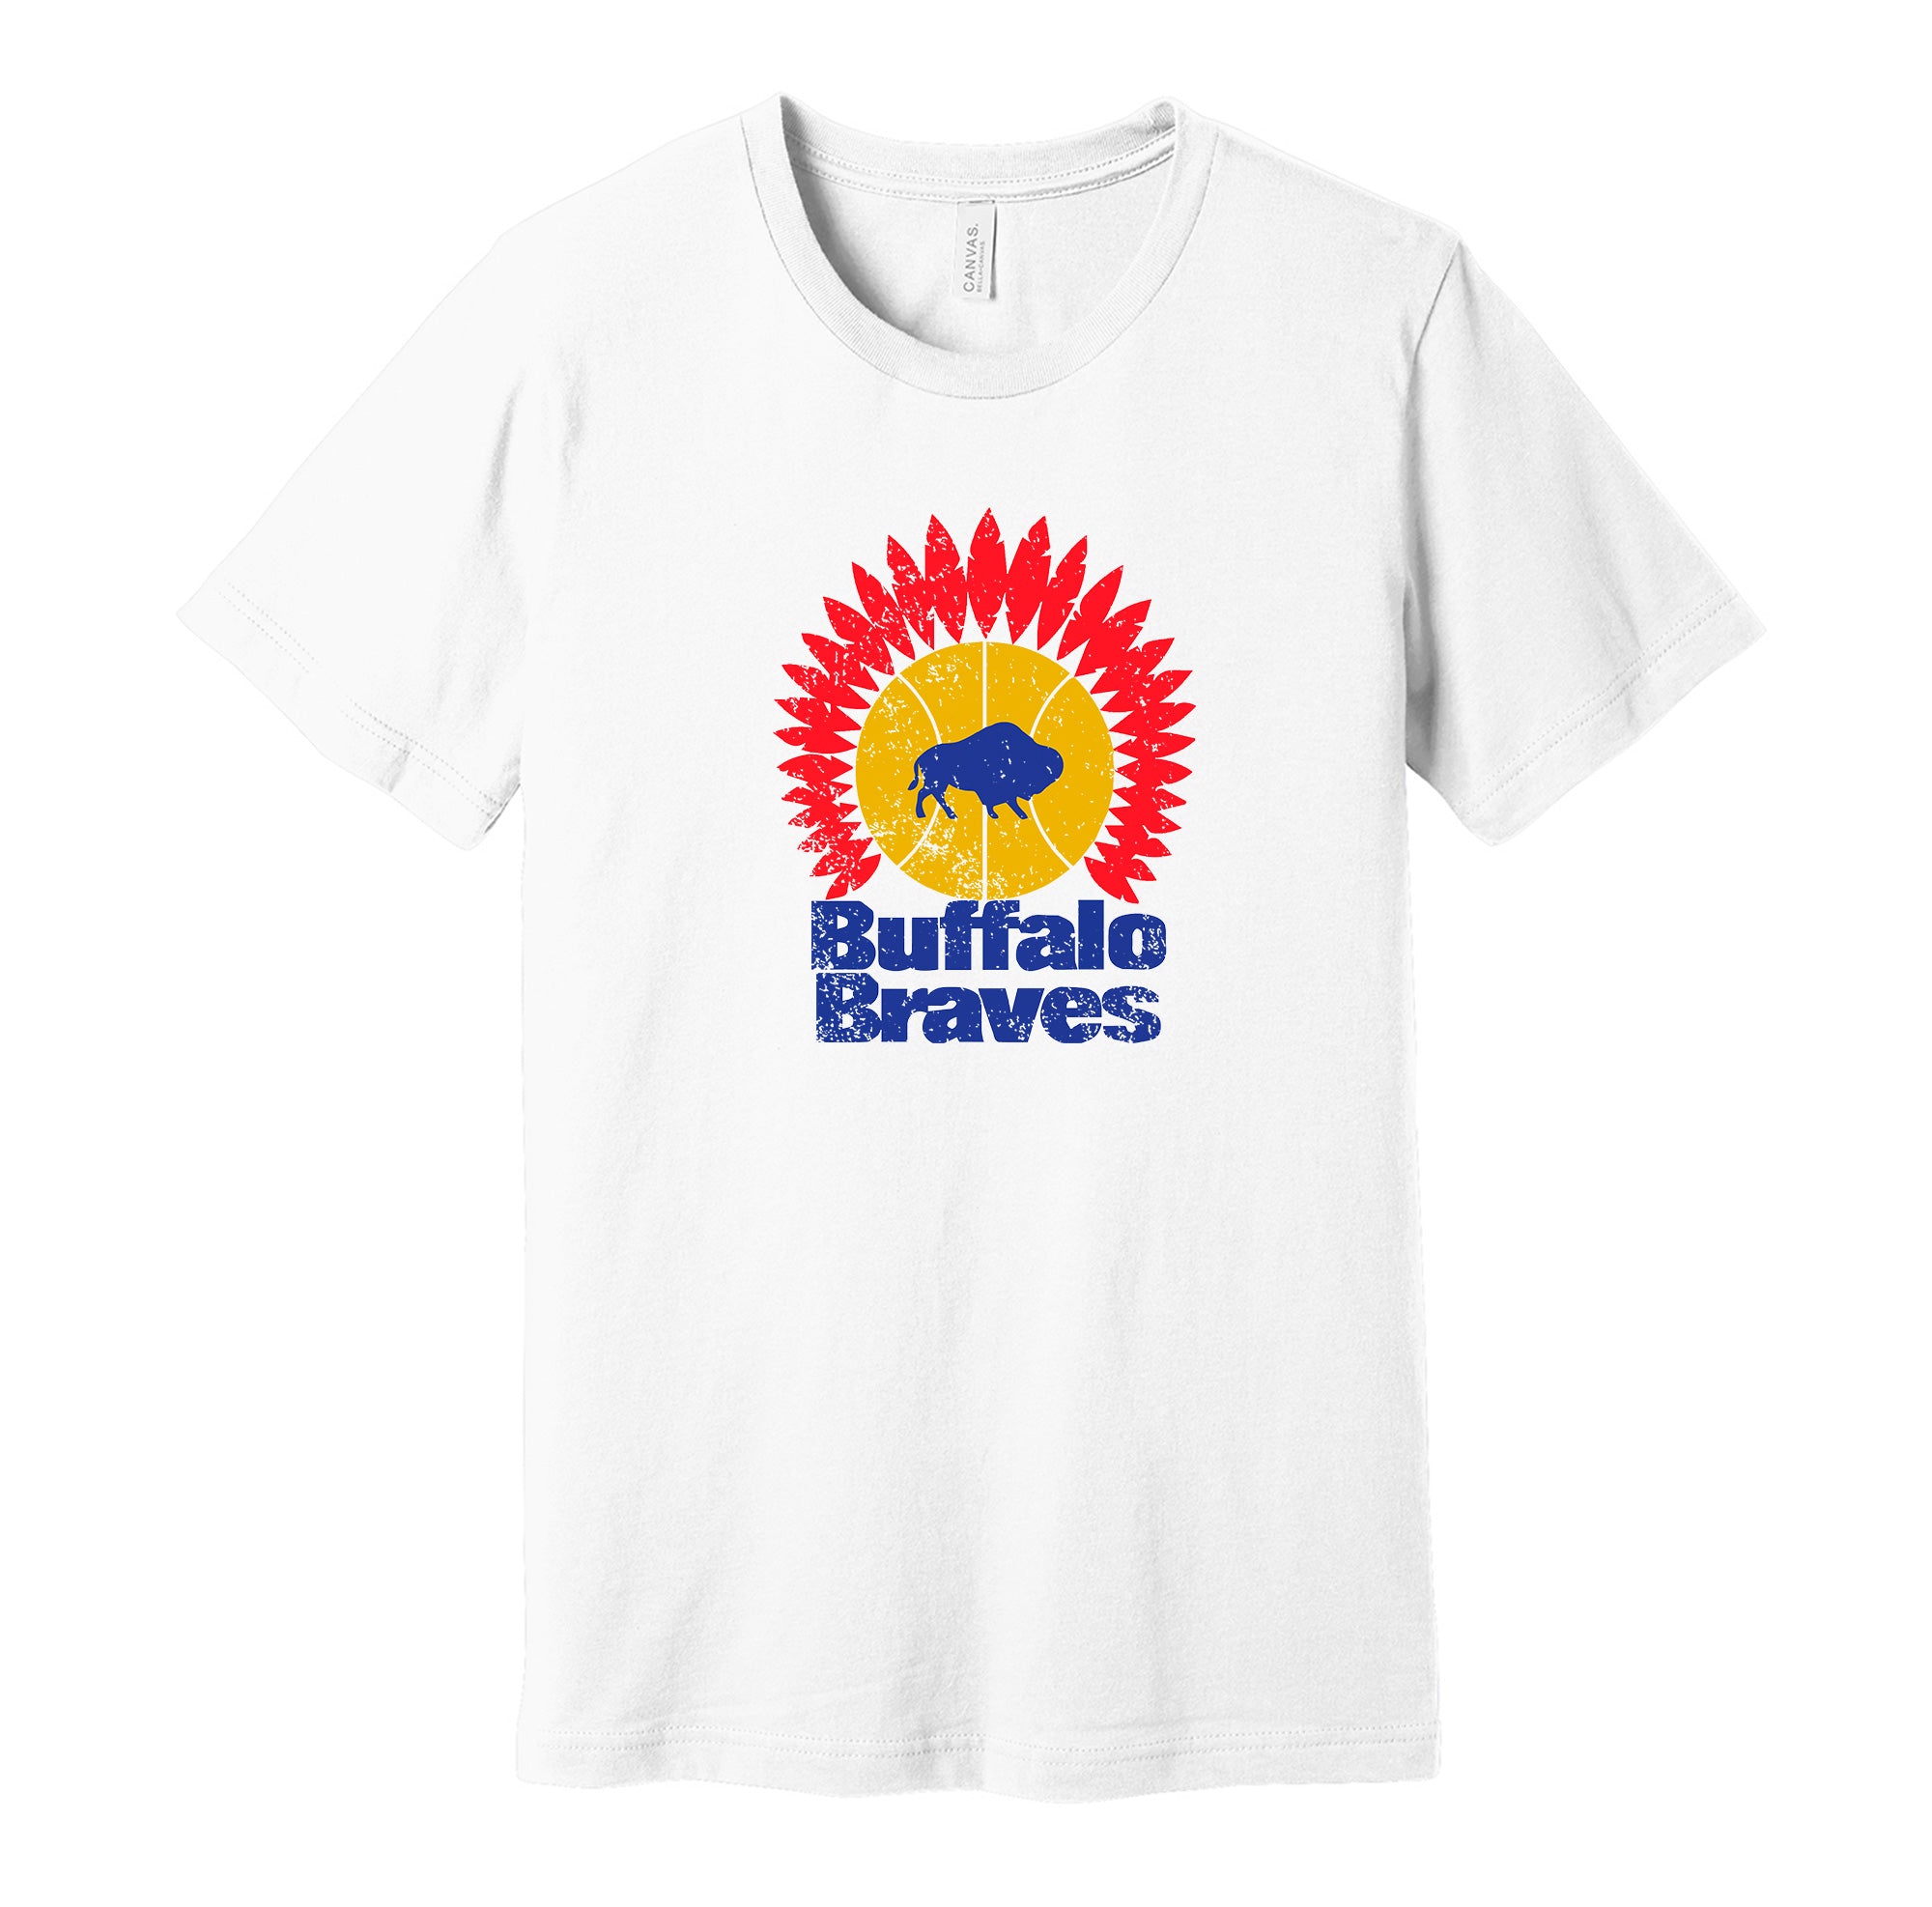  Buffalo Braves 70's Basketball Retro Cool Logo T Shirt